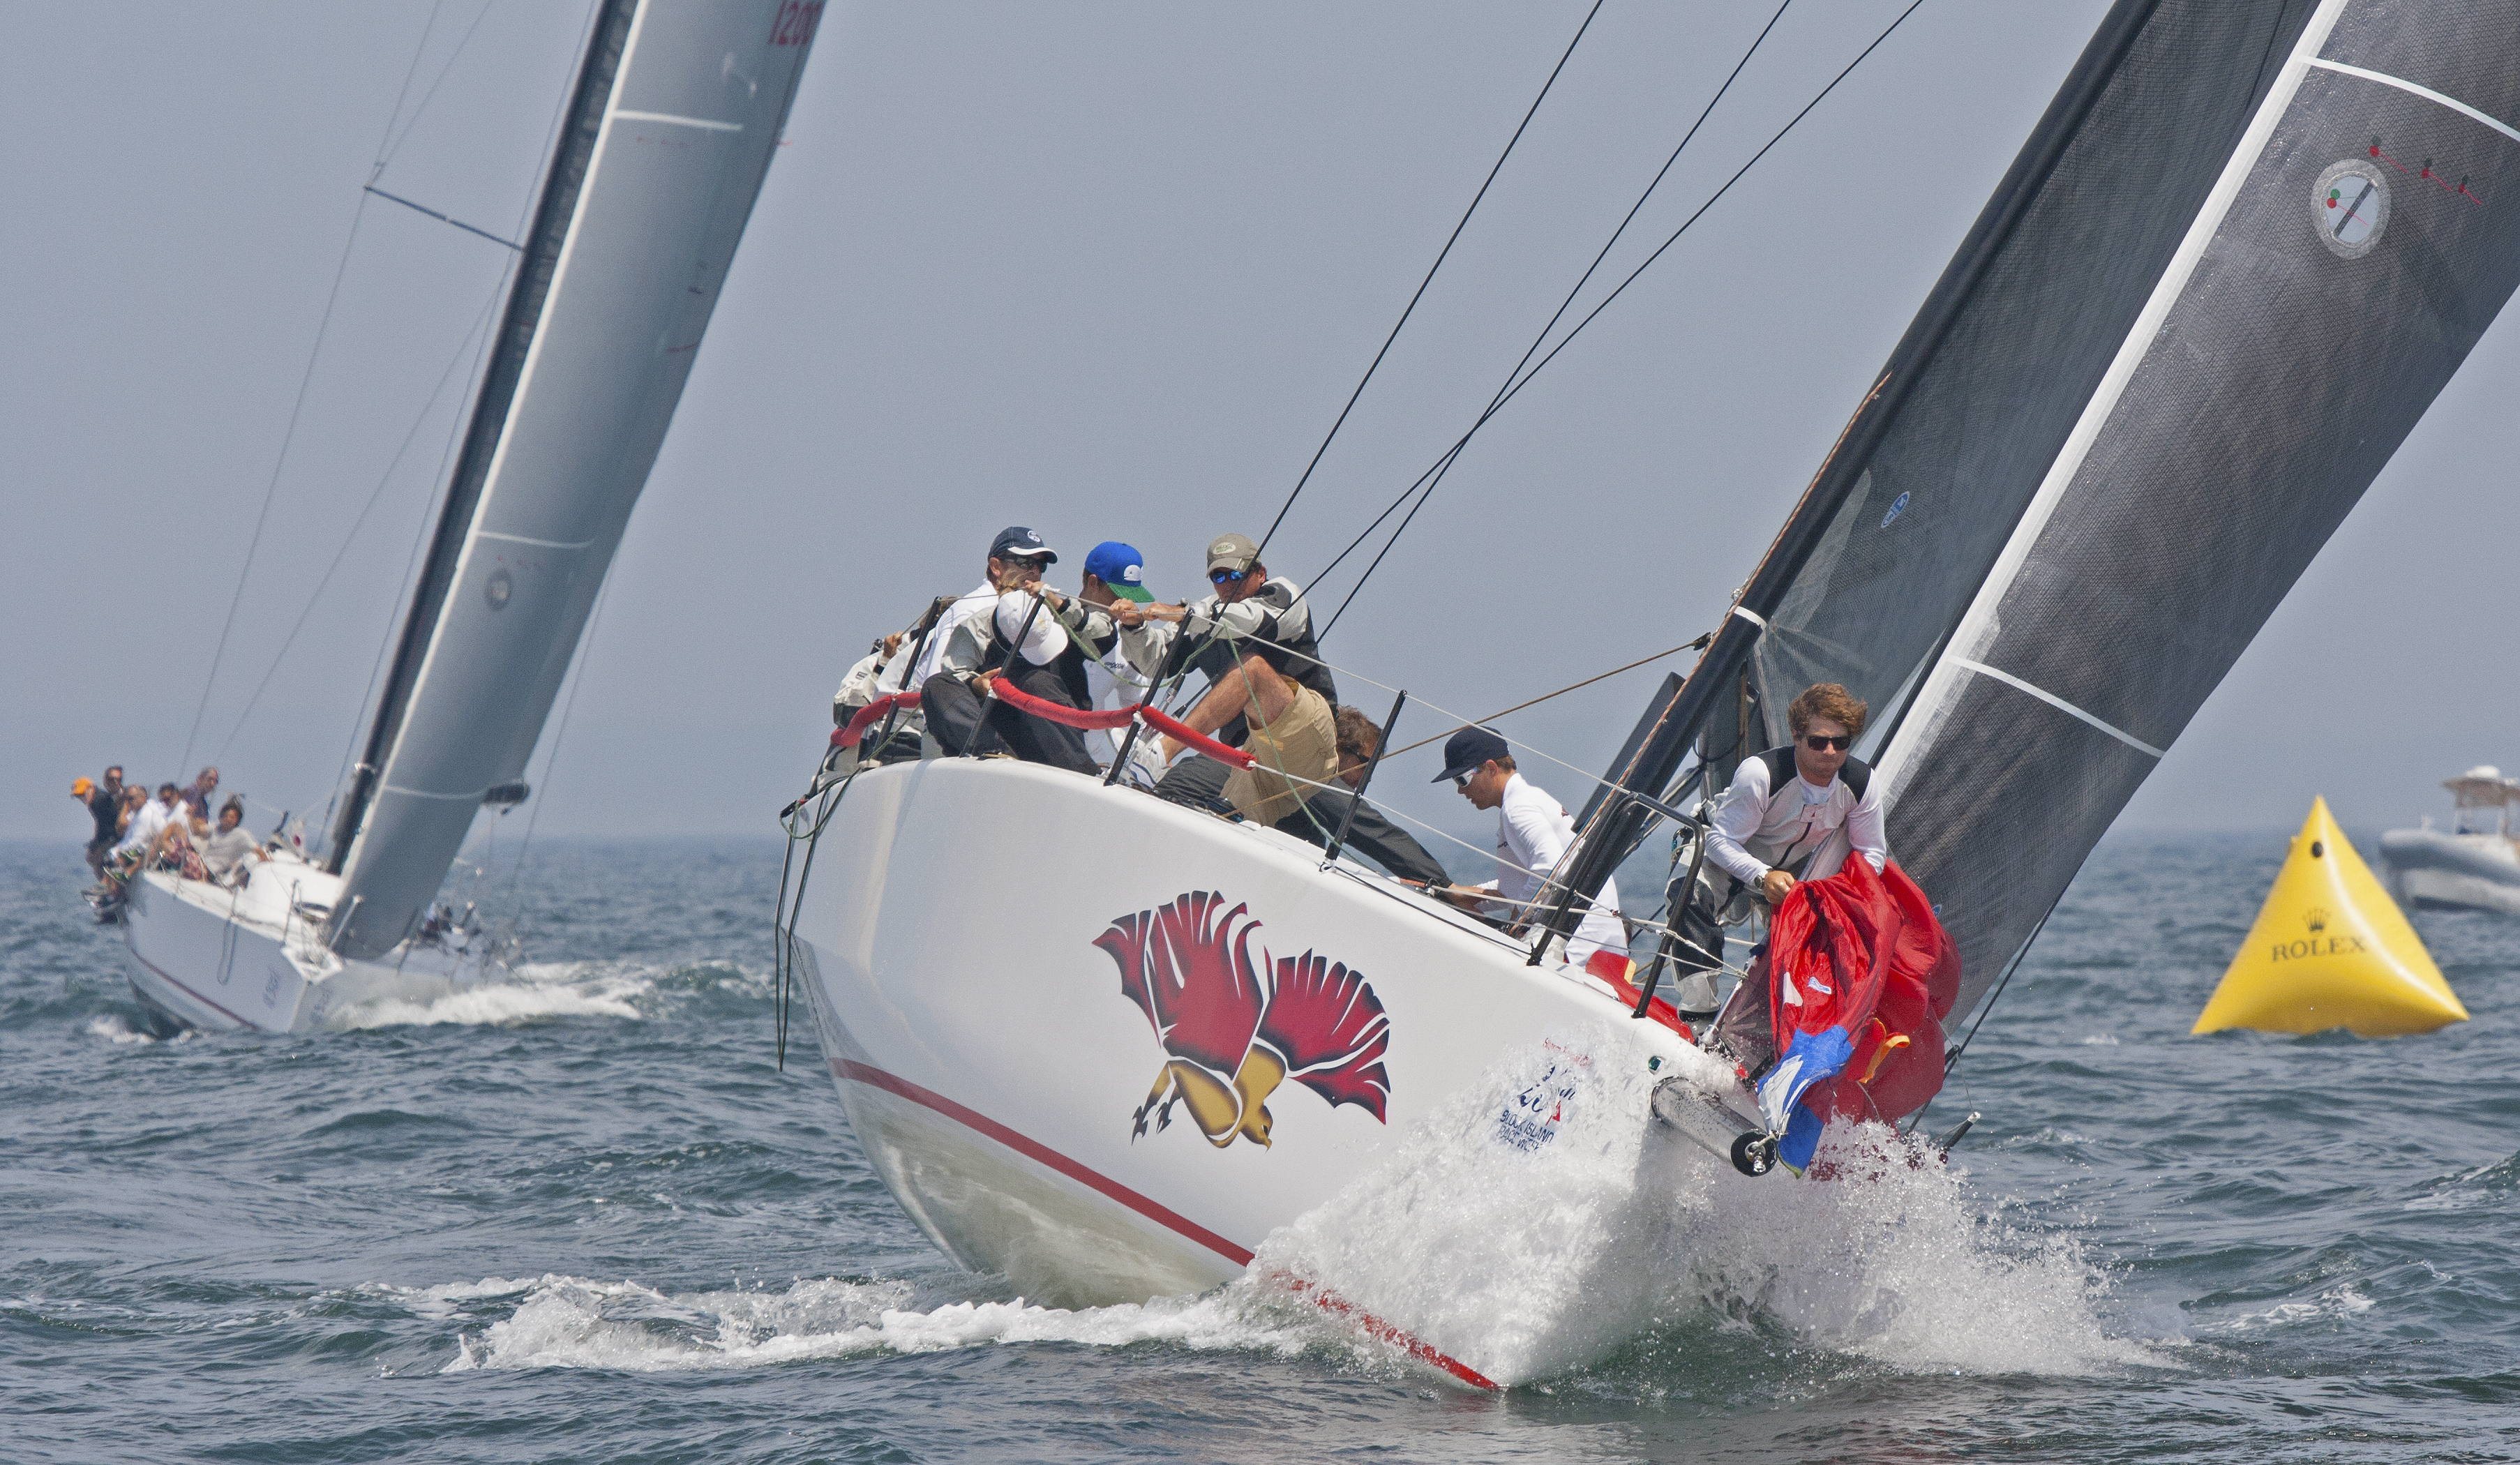 IMG_7014 - Scuttlebutt Sailing News: Providing sailing news for sailors